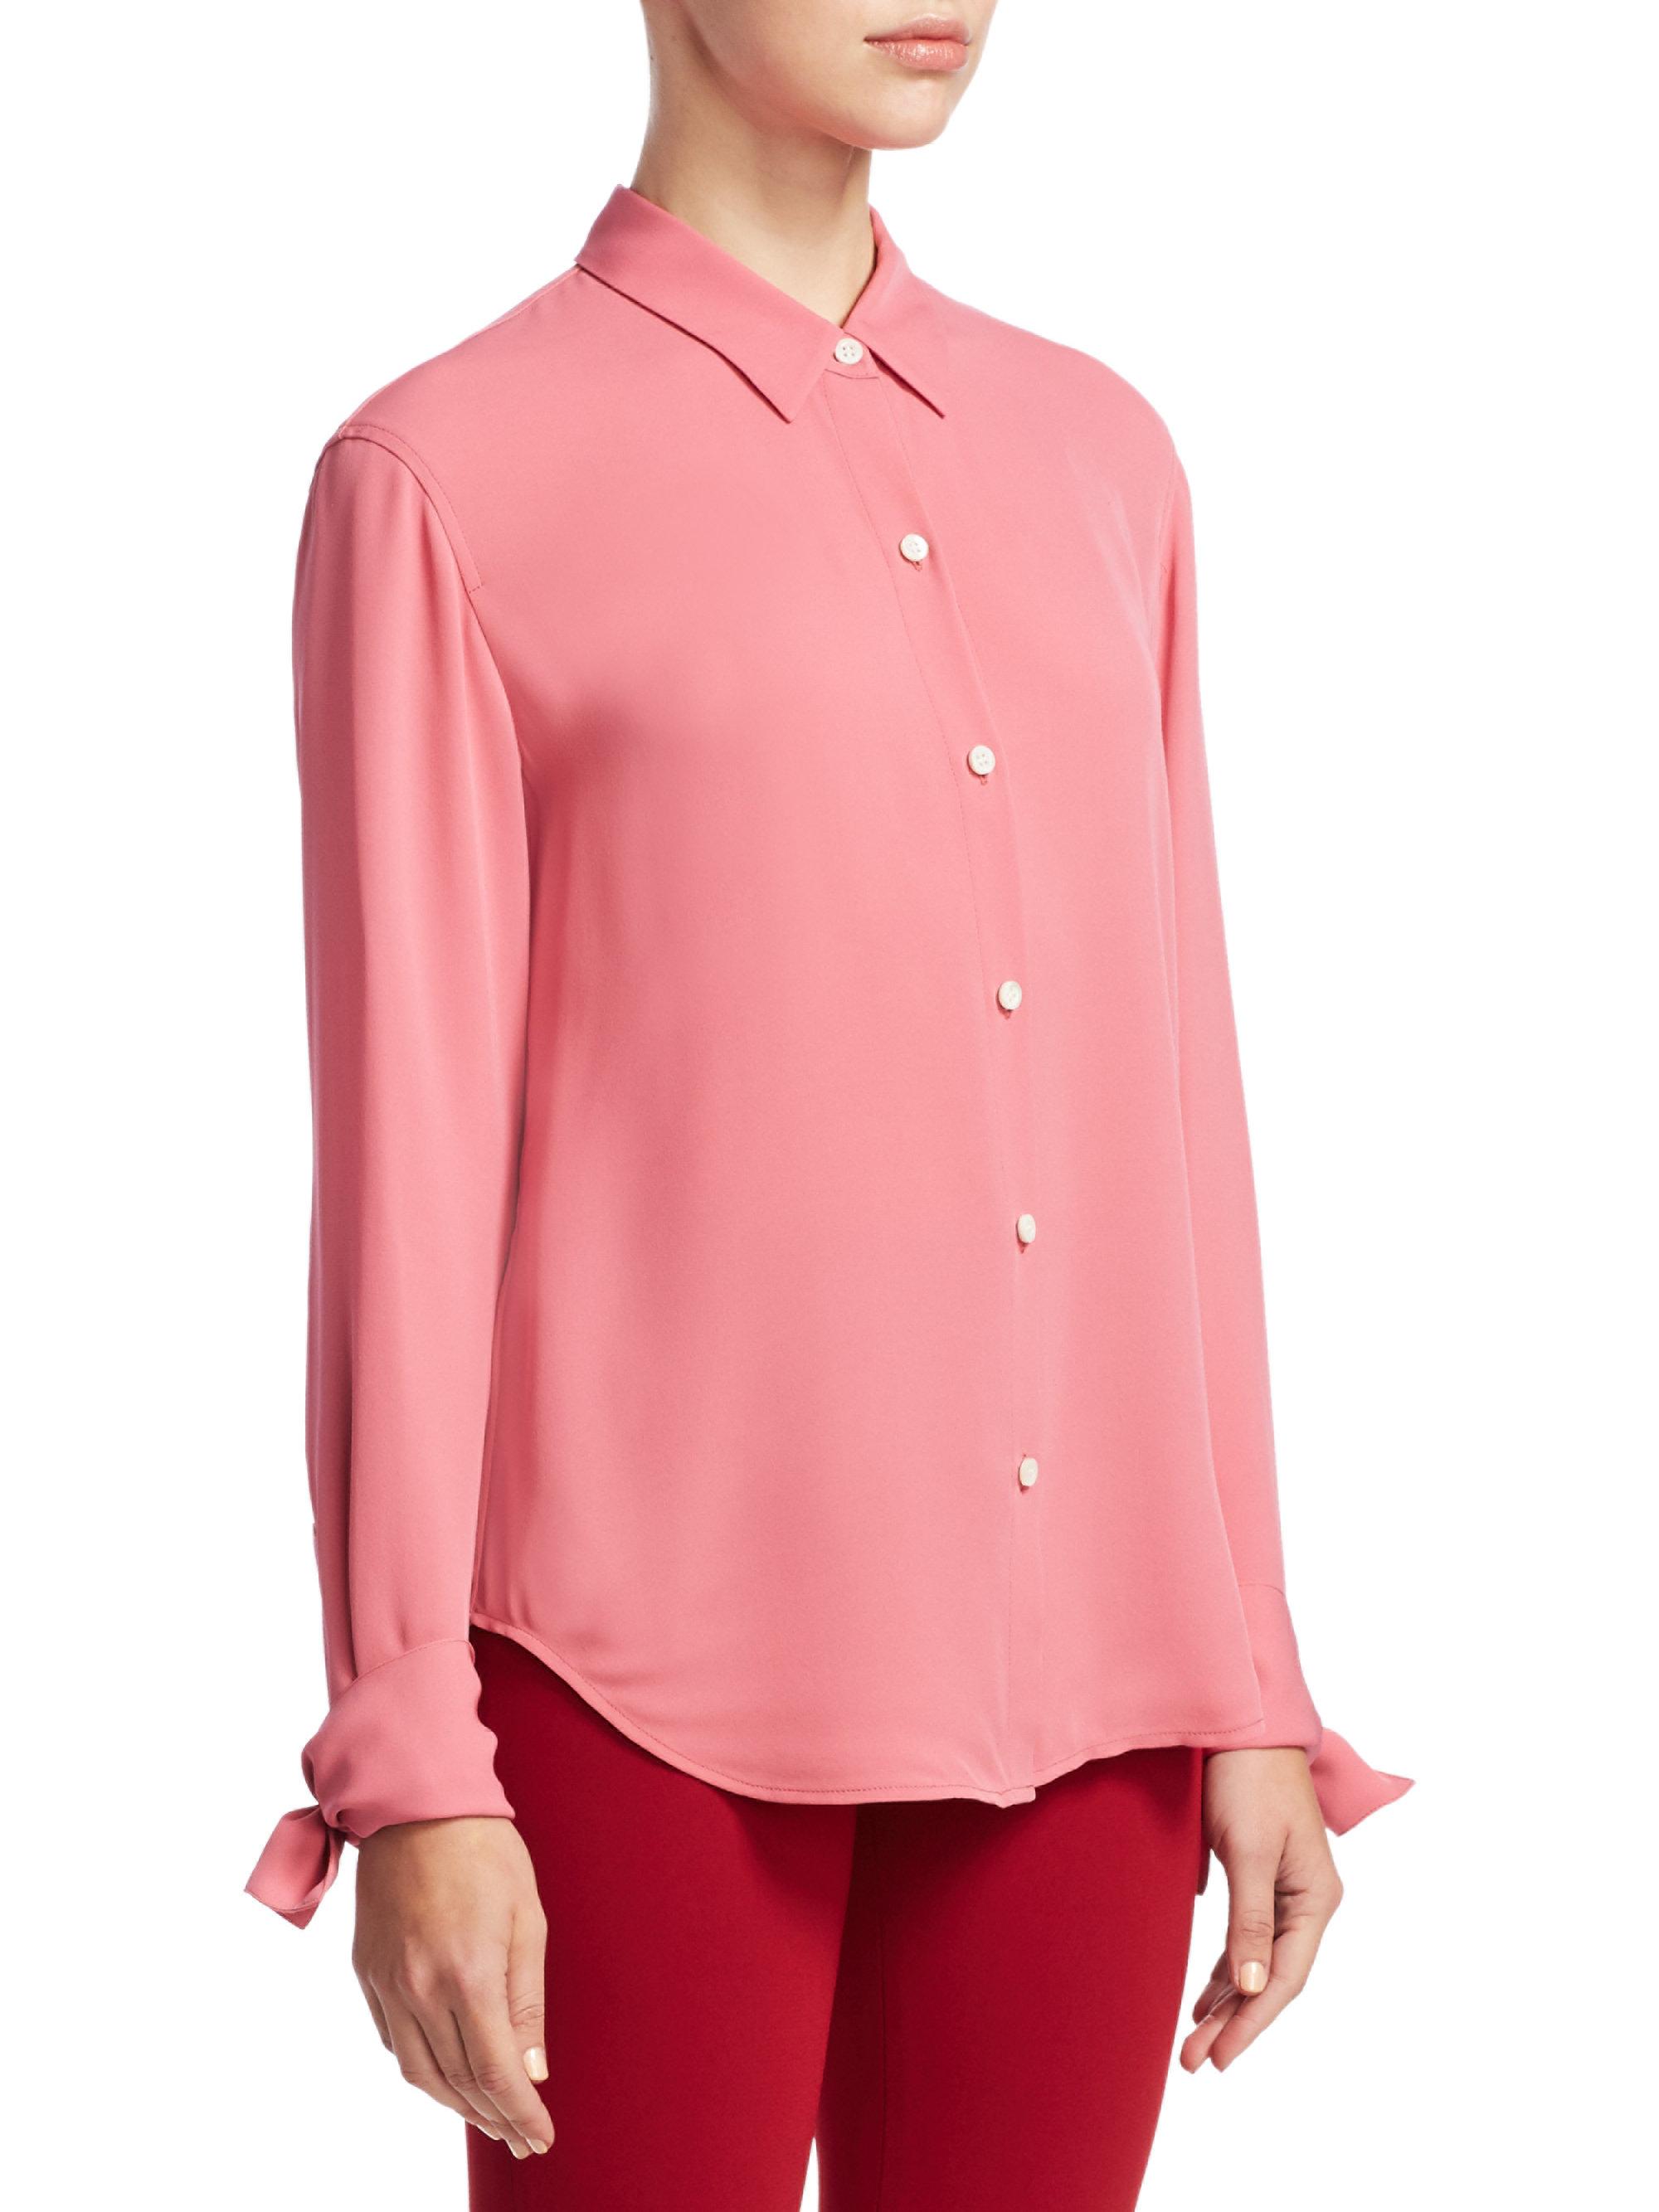 Lyst - Theory Silk Tie Cuff Shirt in Pink